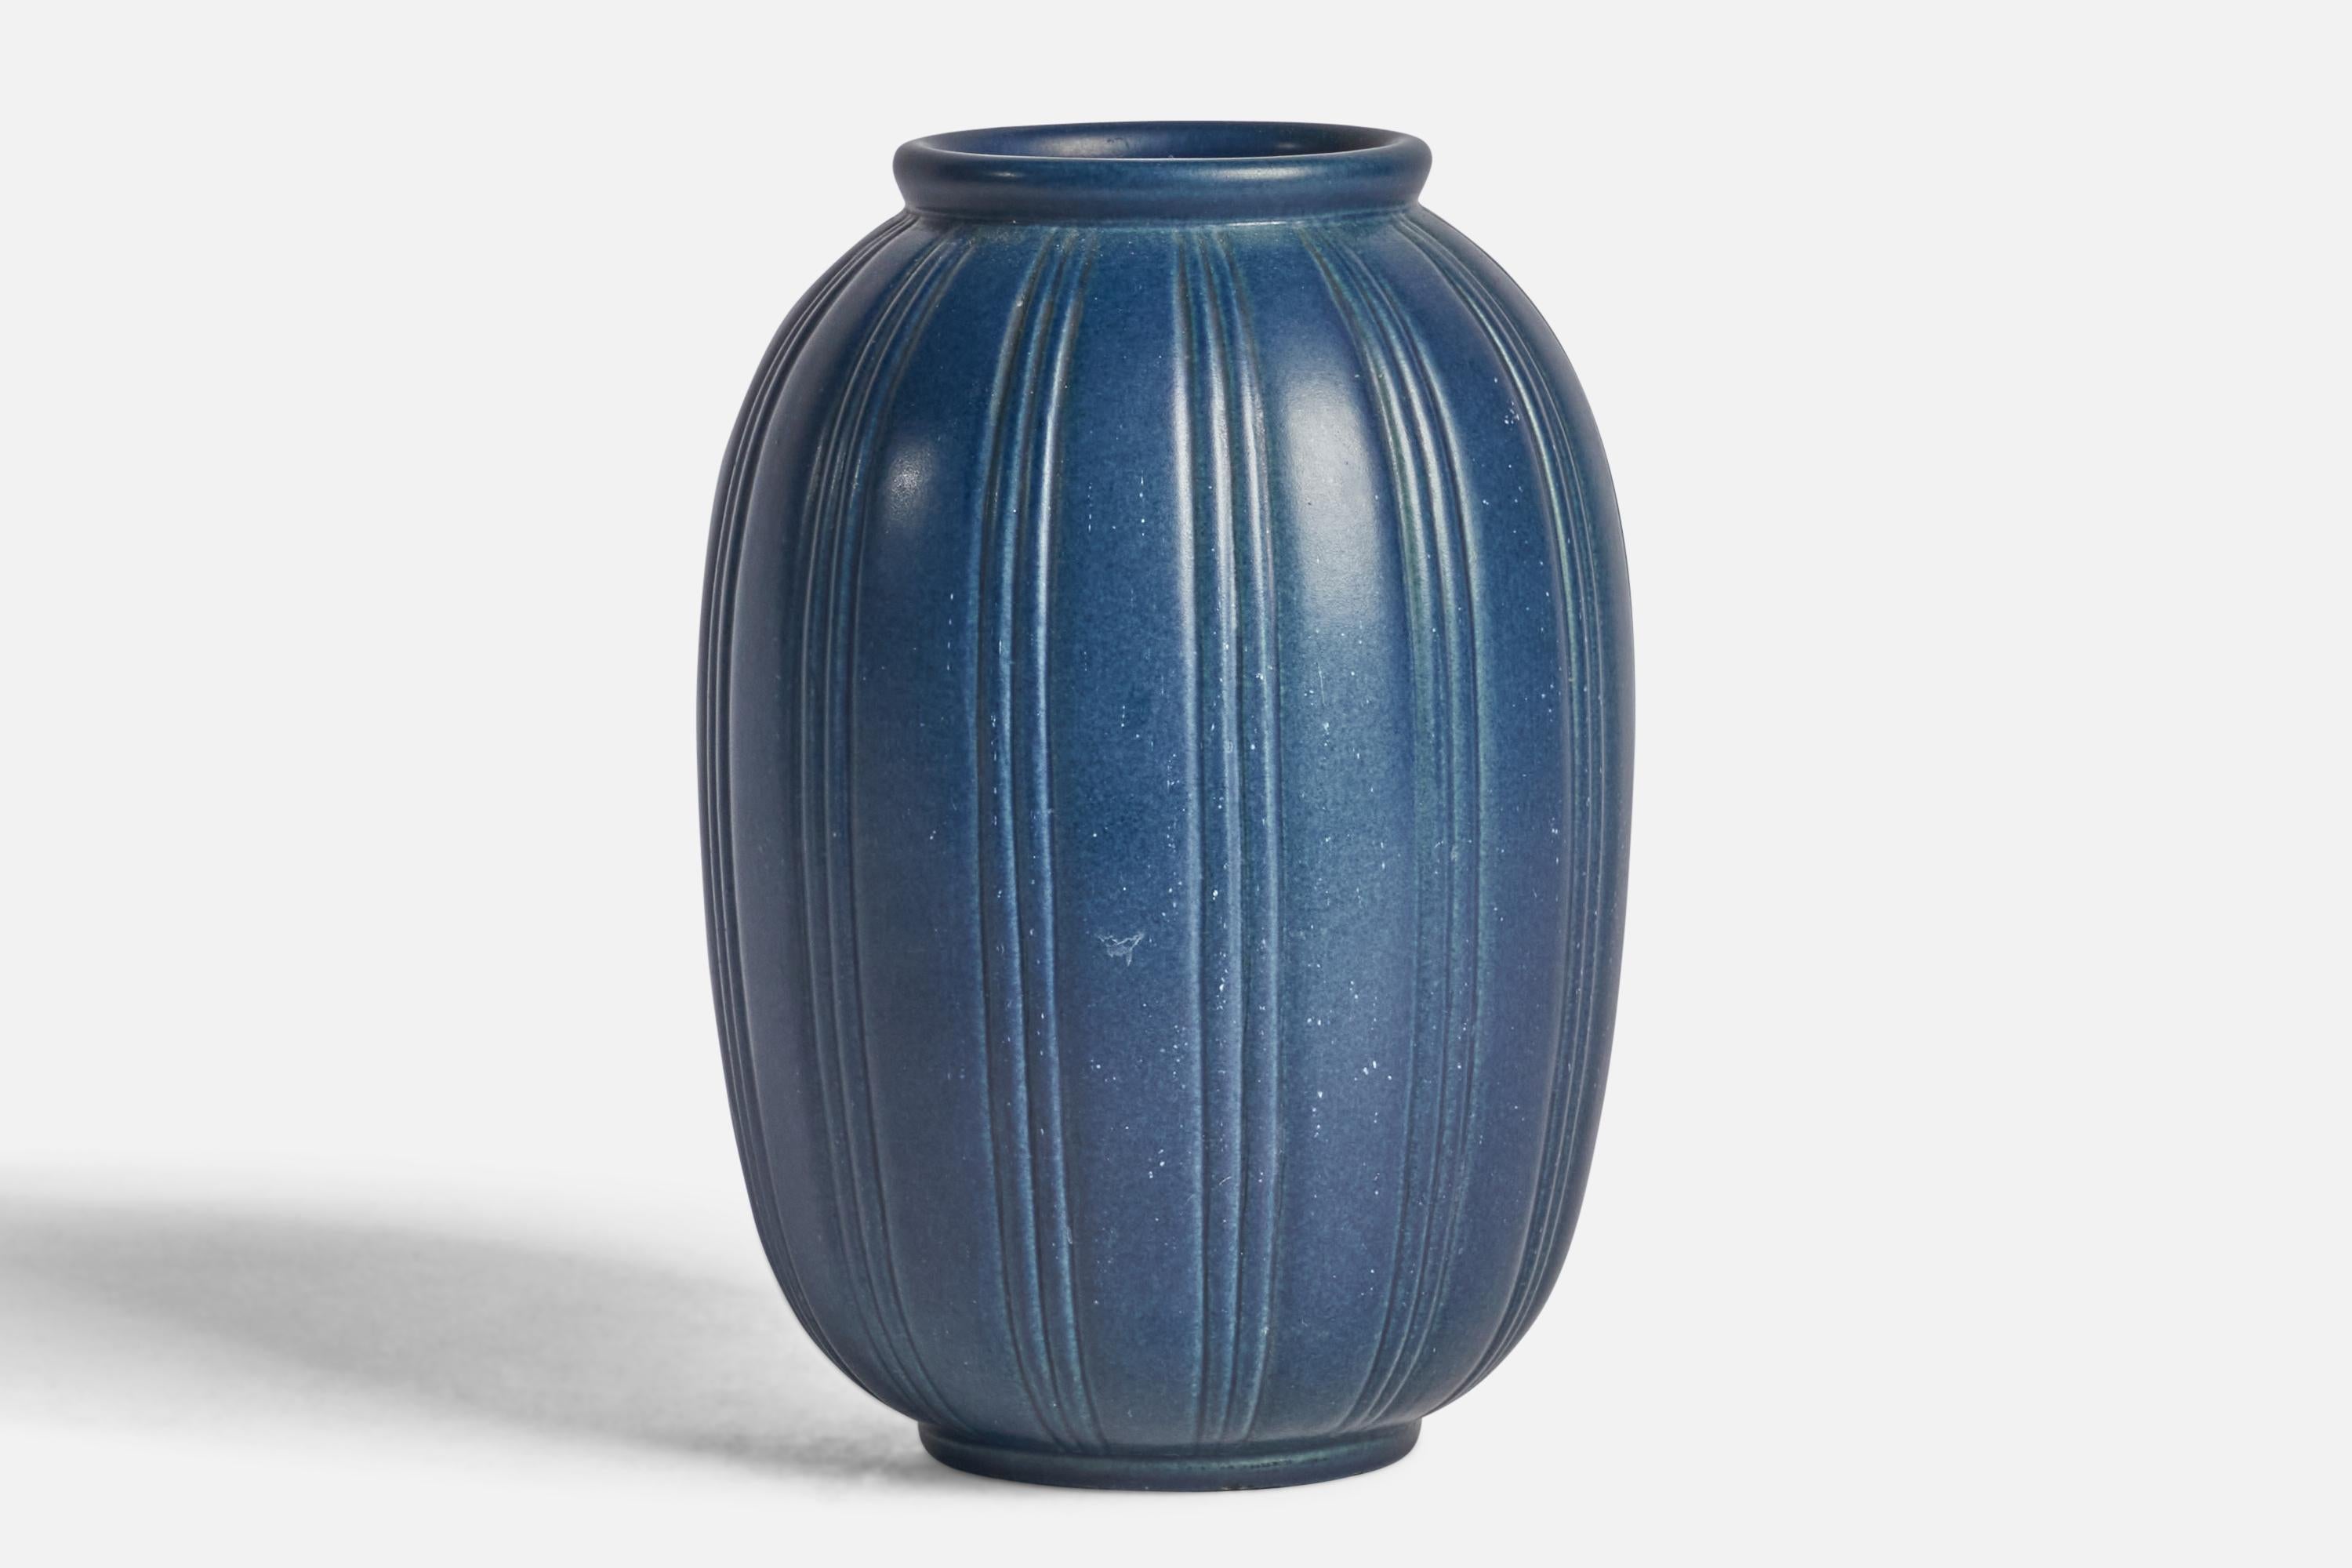 A blue-glazed fluted stoneware vase designed and produced by Peter Ipsens Enke, Denmark, 1940s.
